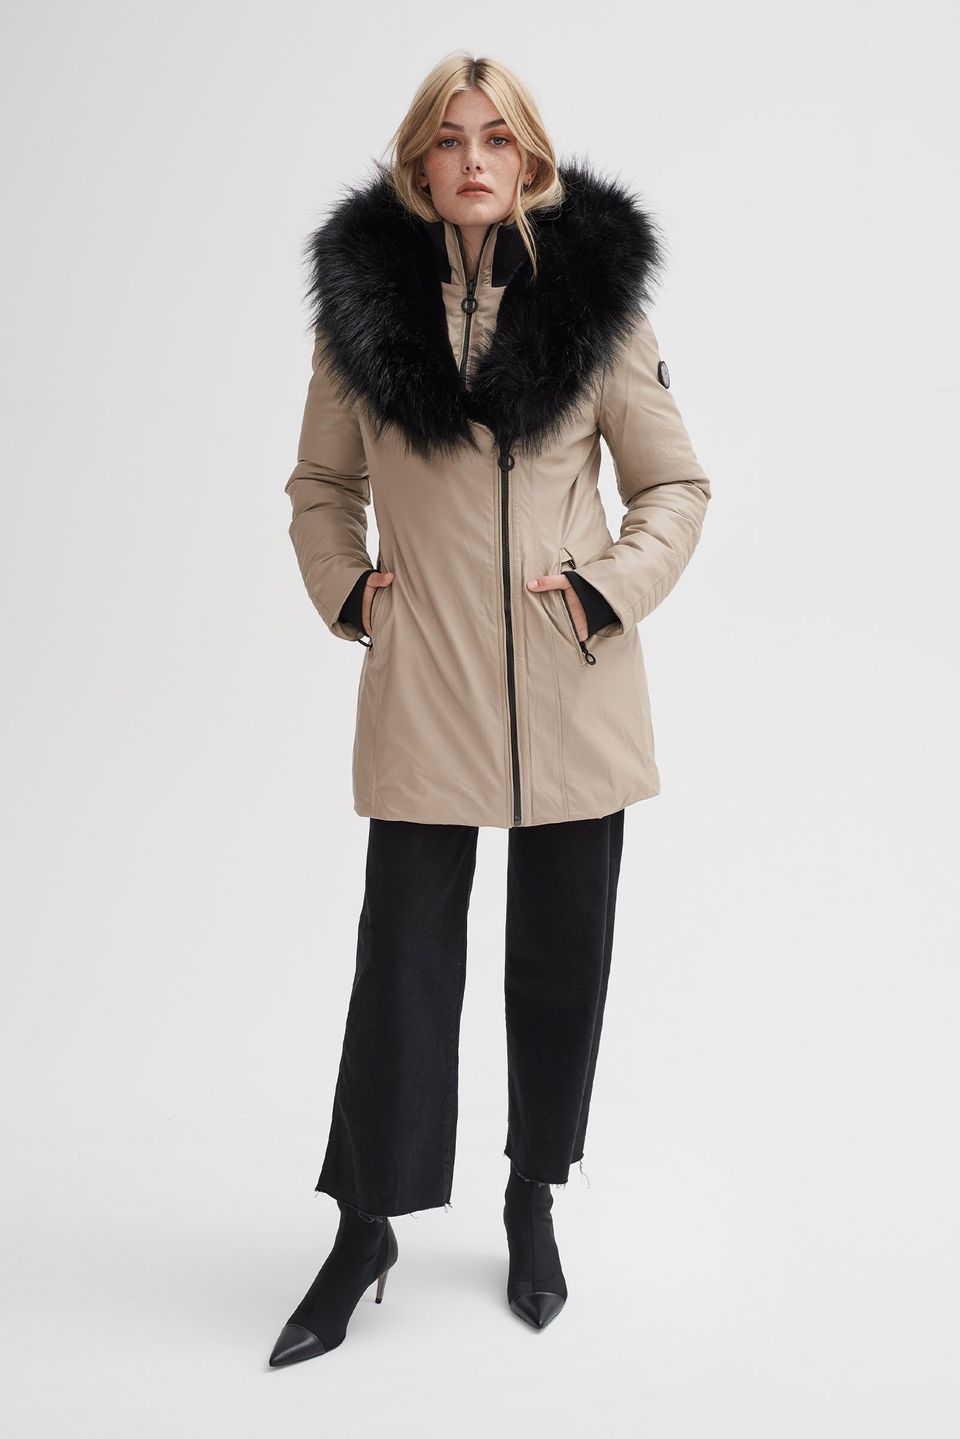 21 Paltone geachete ideas | jachete, ținute, haine